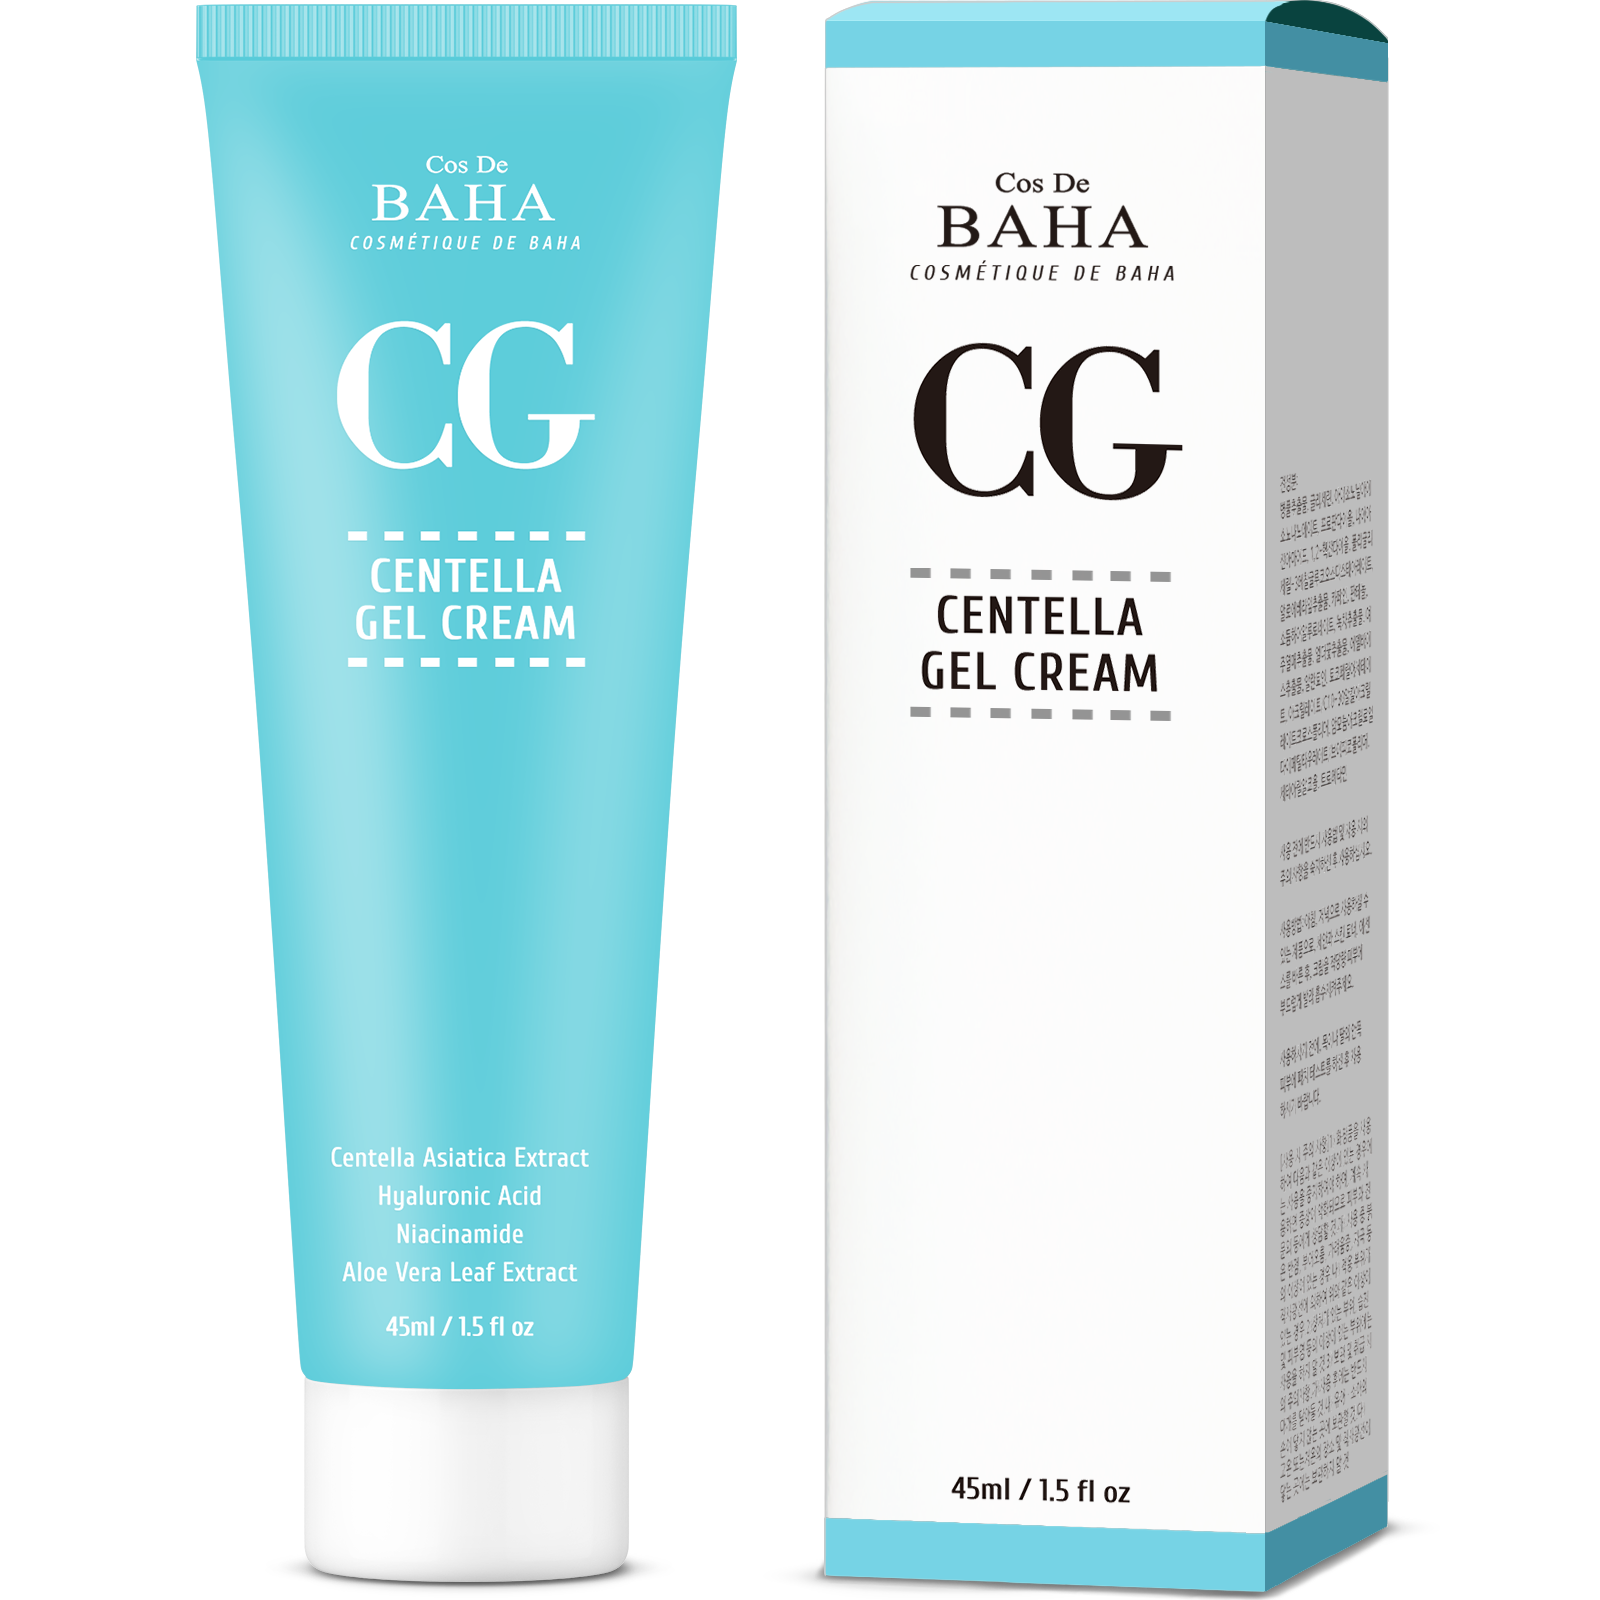 Cos De BAHA-Centella Asiatica Recovery Cream for Face - Age Spot, Skin